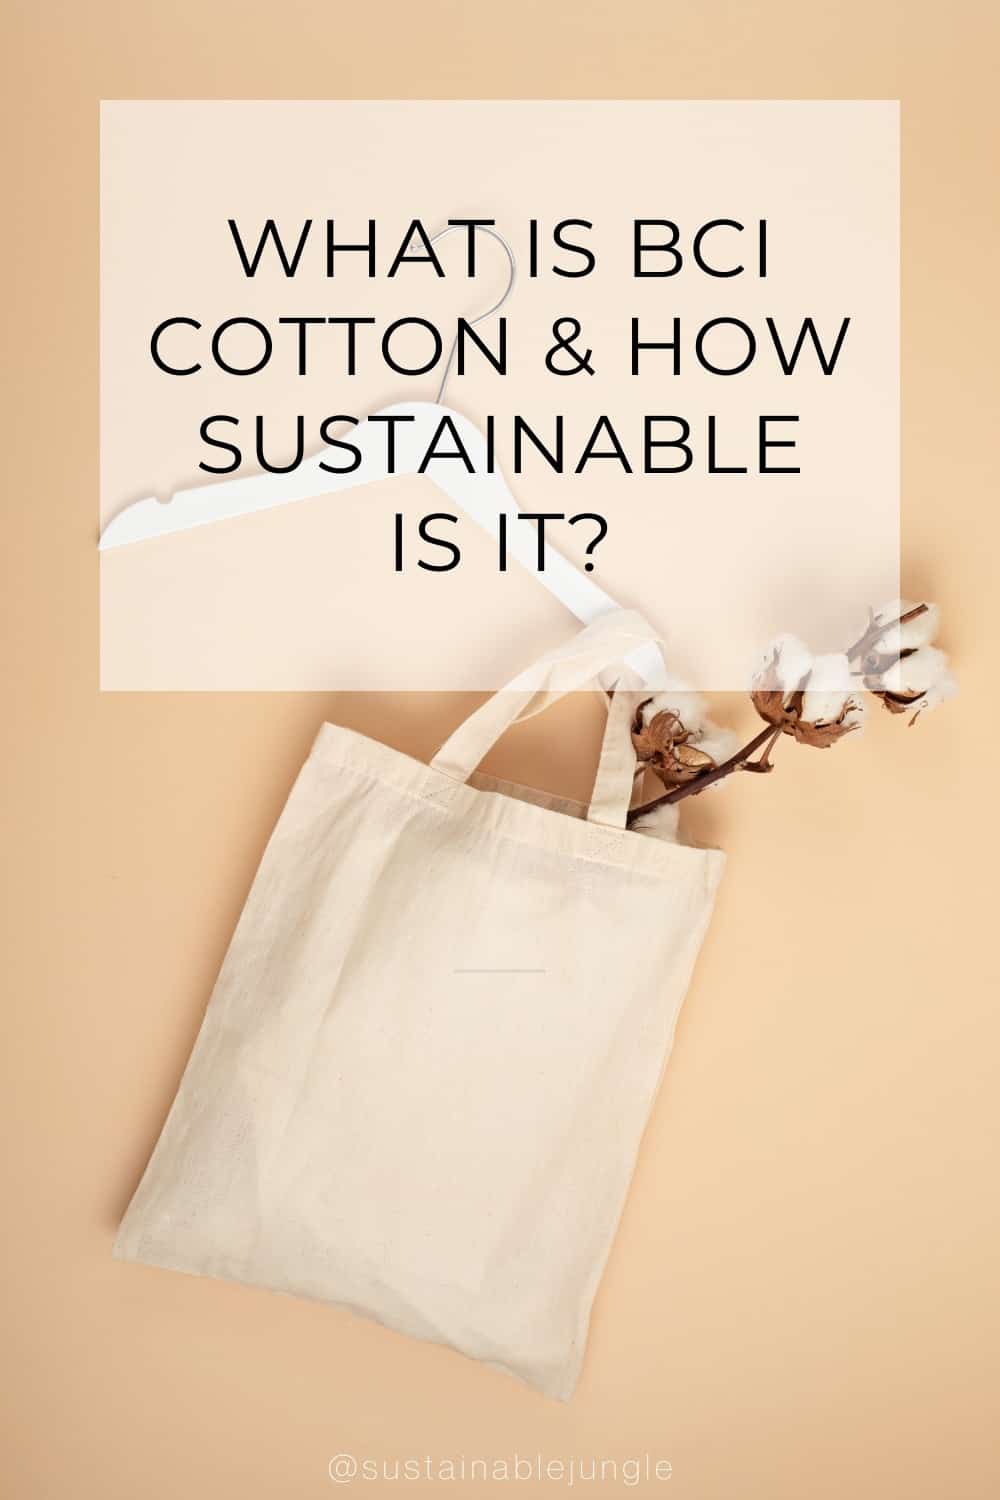 BCI棉是什么?它的可持续性如何?#什么样的棉花#标准的棉花#可持续的棉花#道德的棉花#可持续的棉花#怎样的棉花#有机棉#可持续的丛林图片由netrun78通过Getty Images在Canva Pro上提供